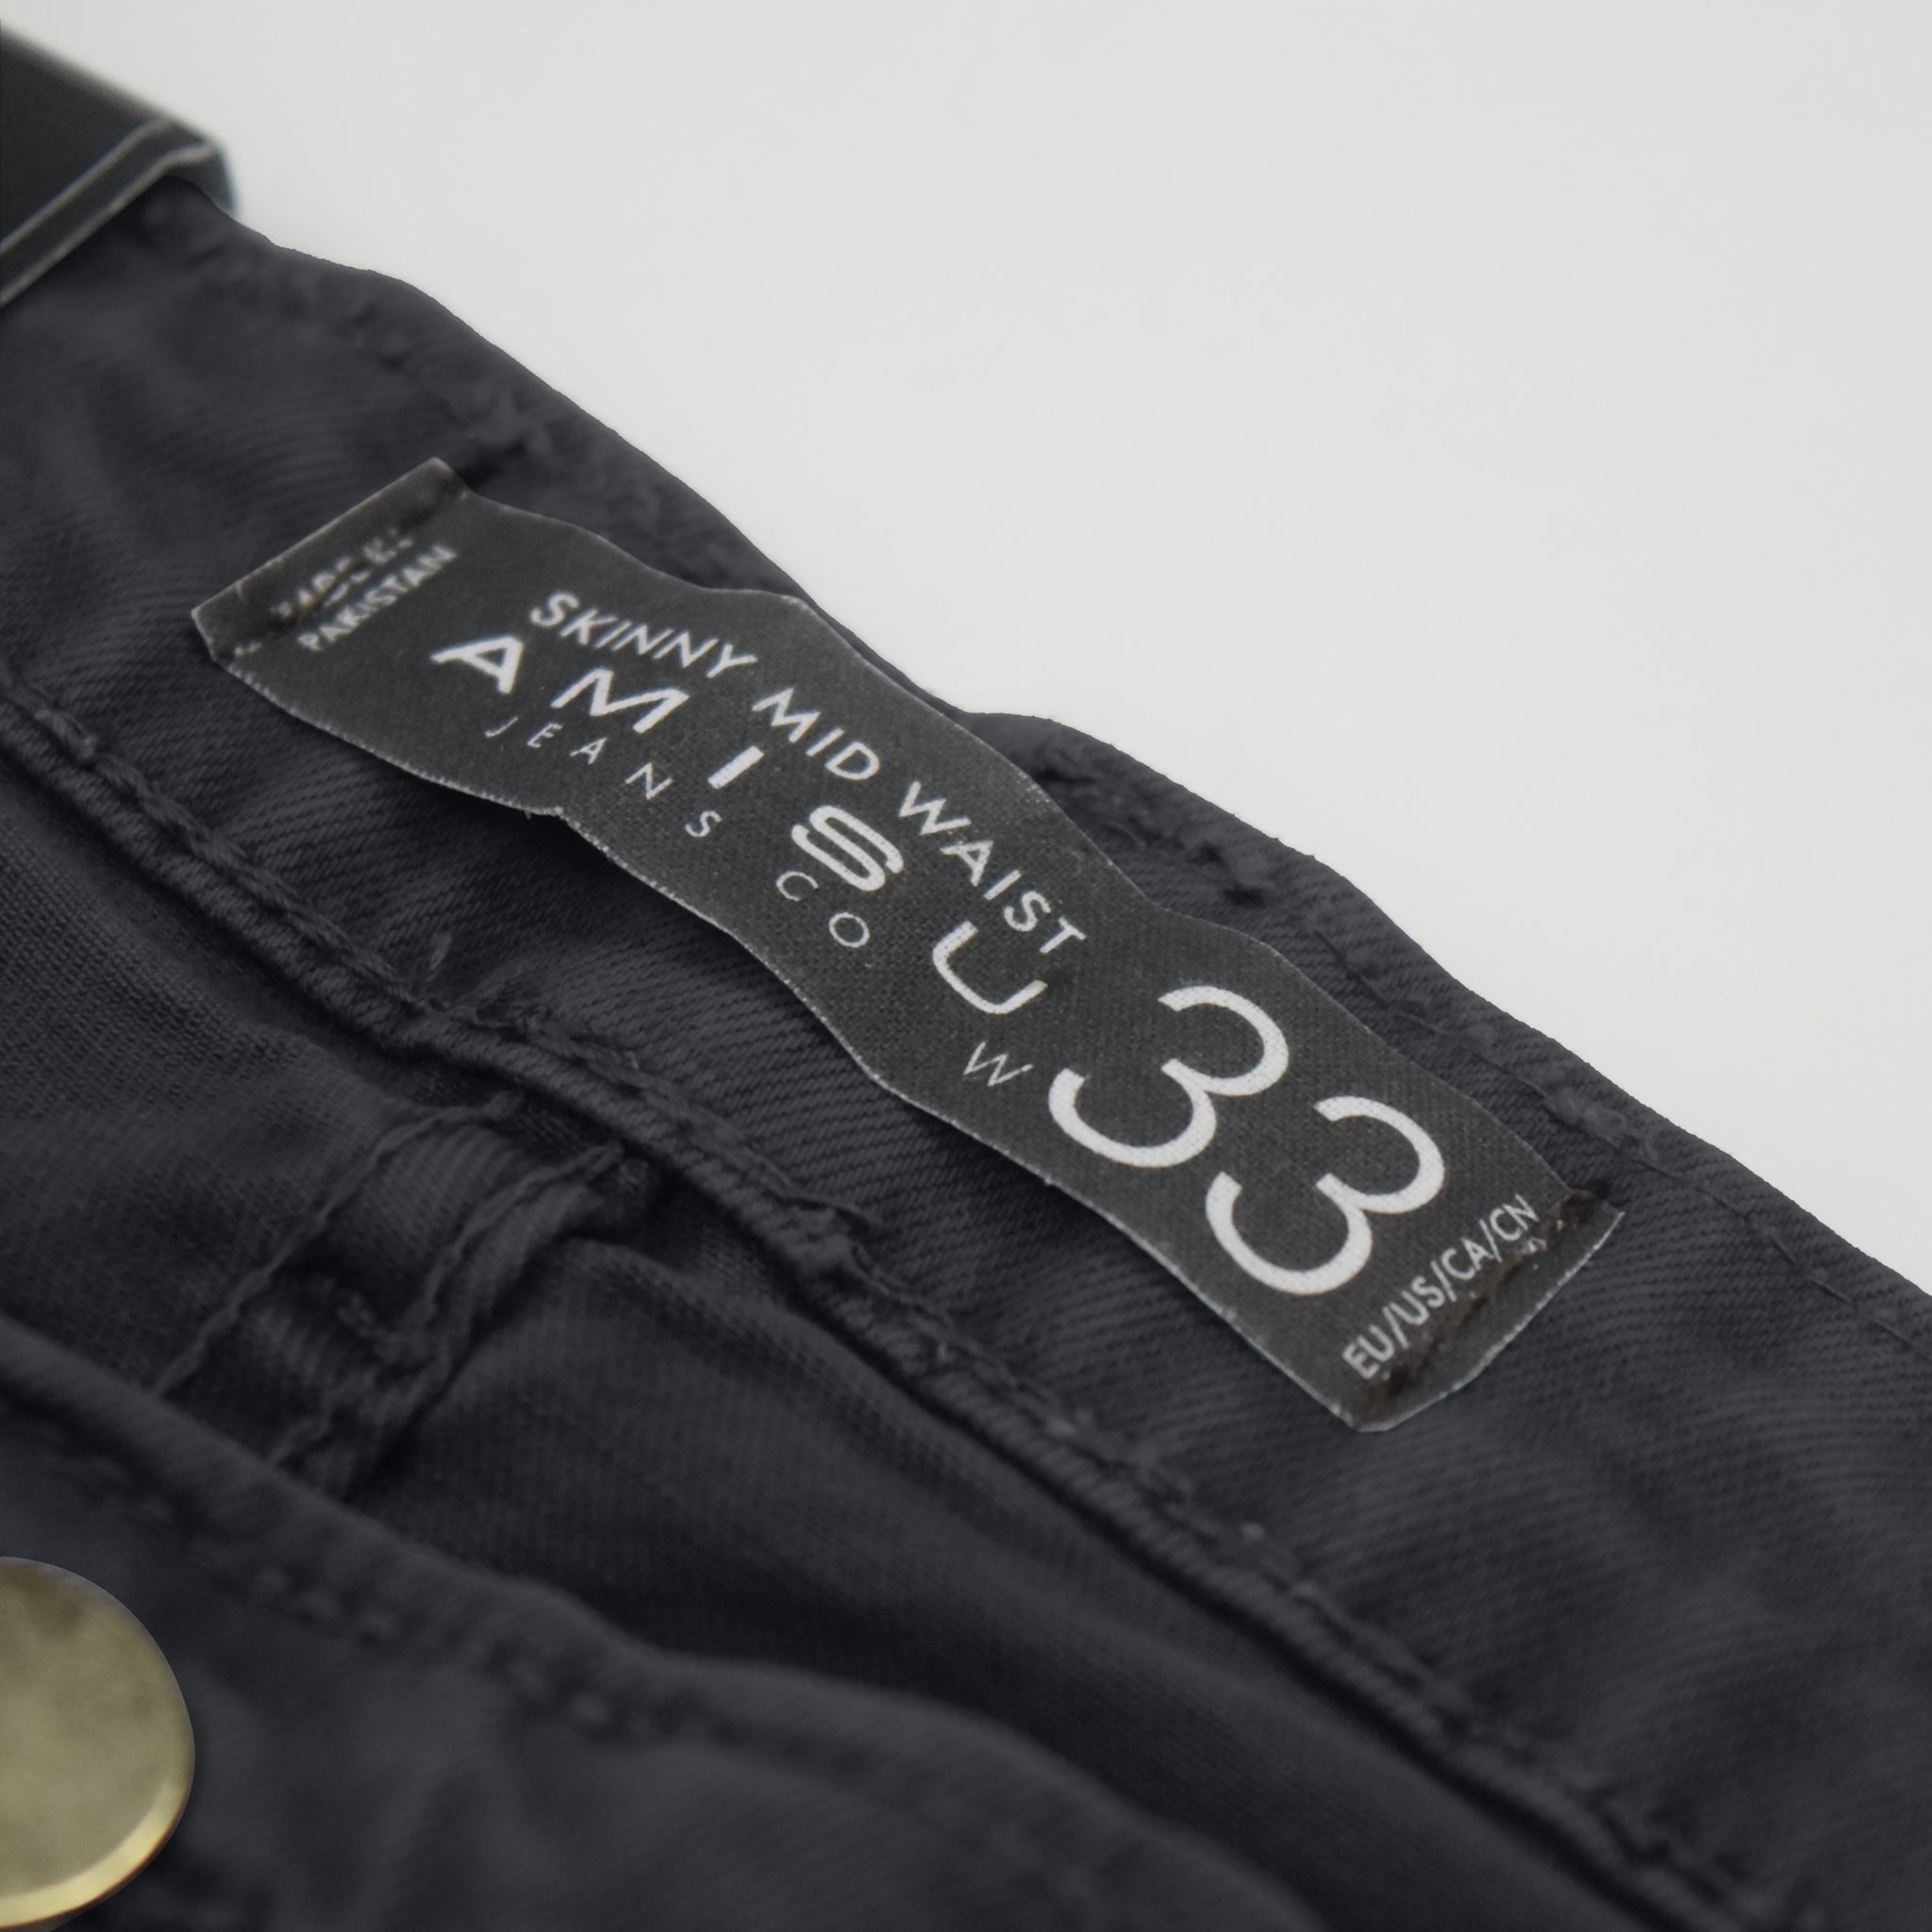 amisu jeans price